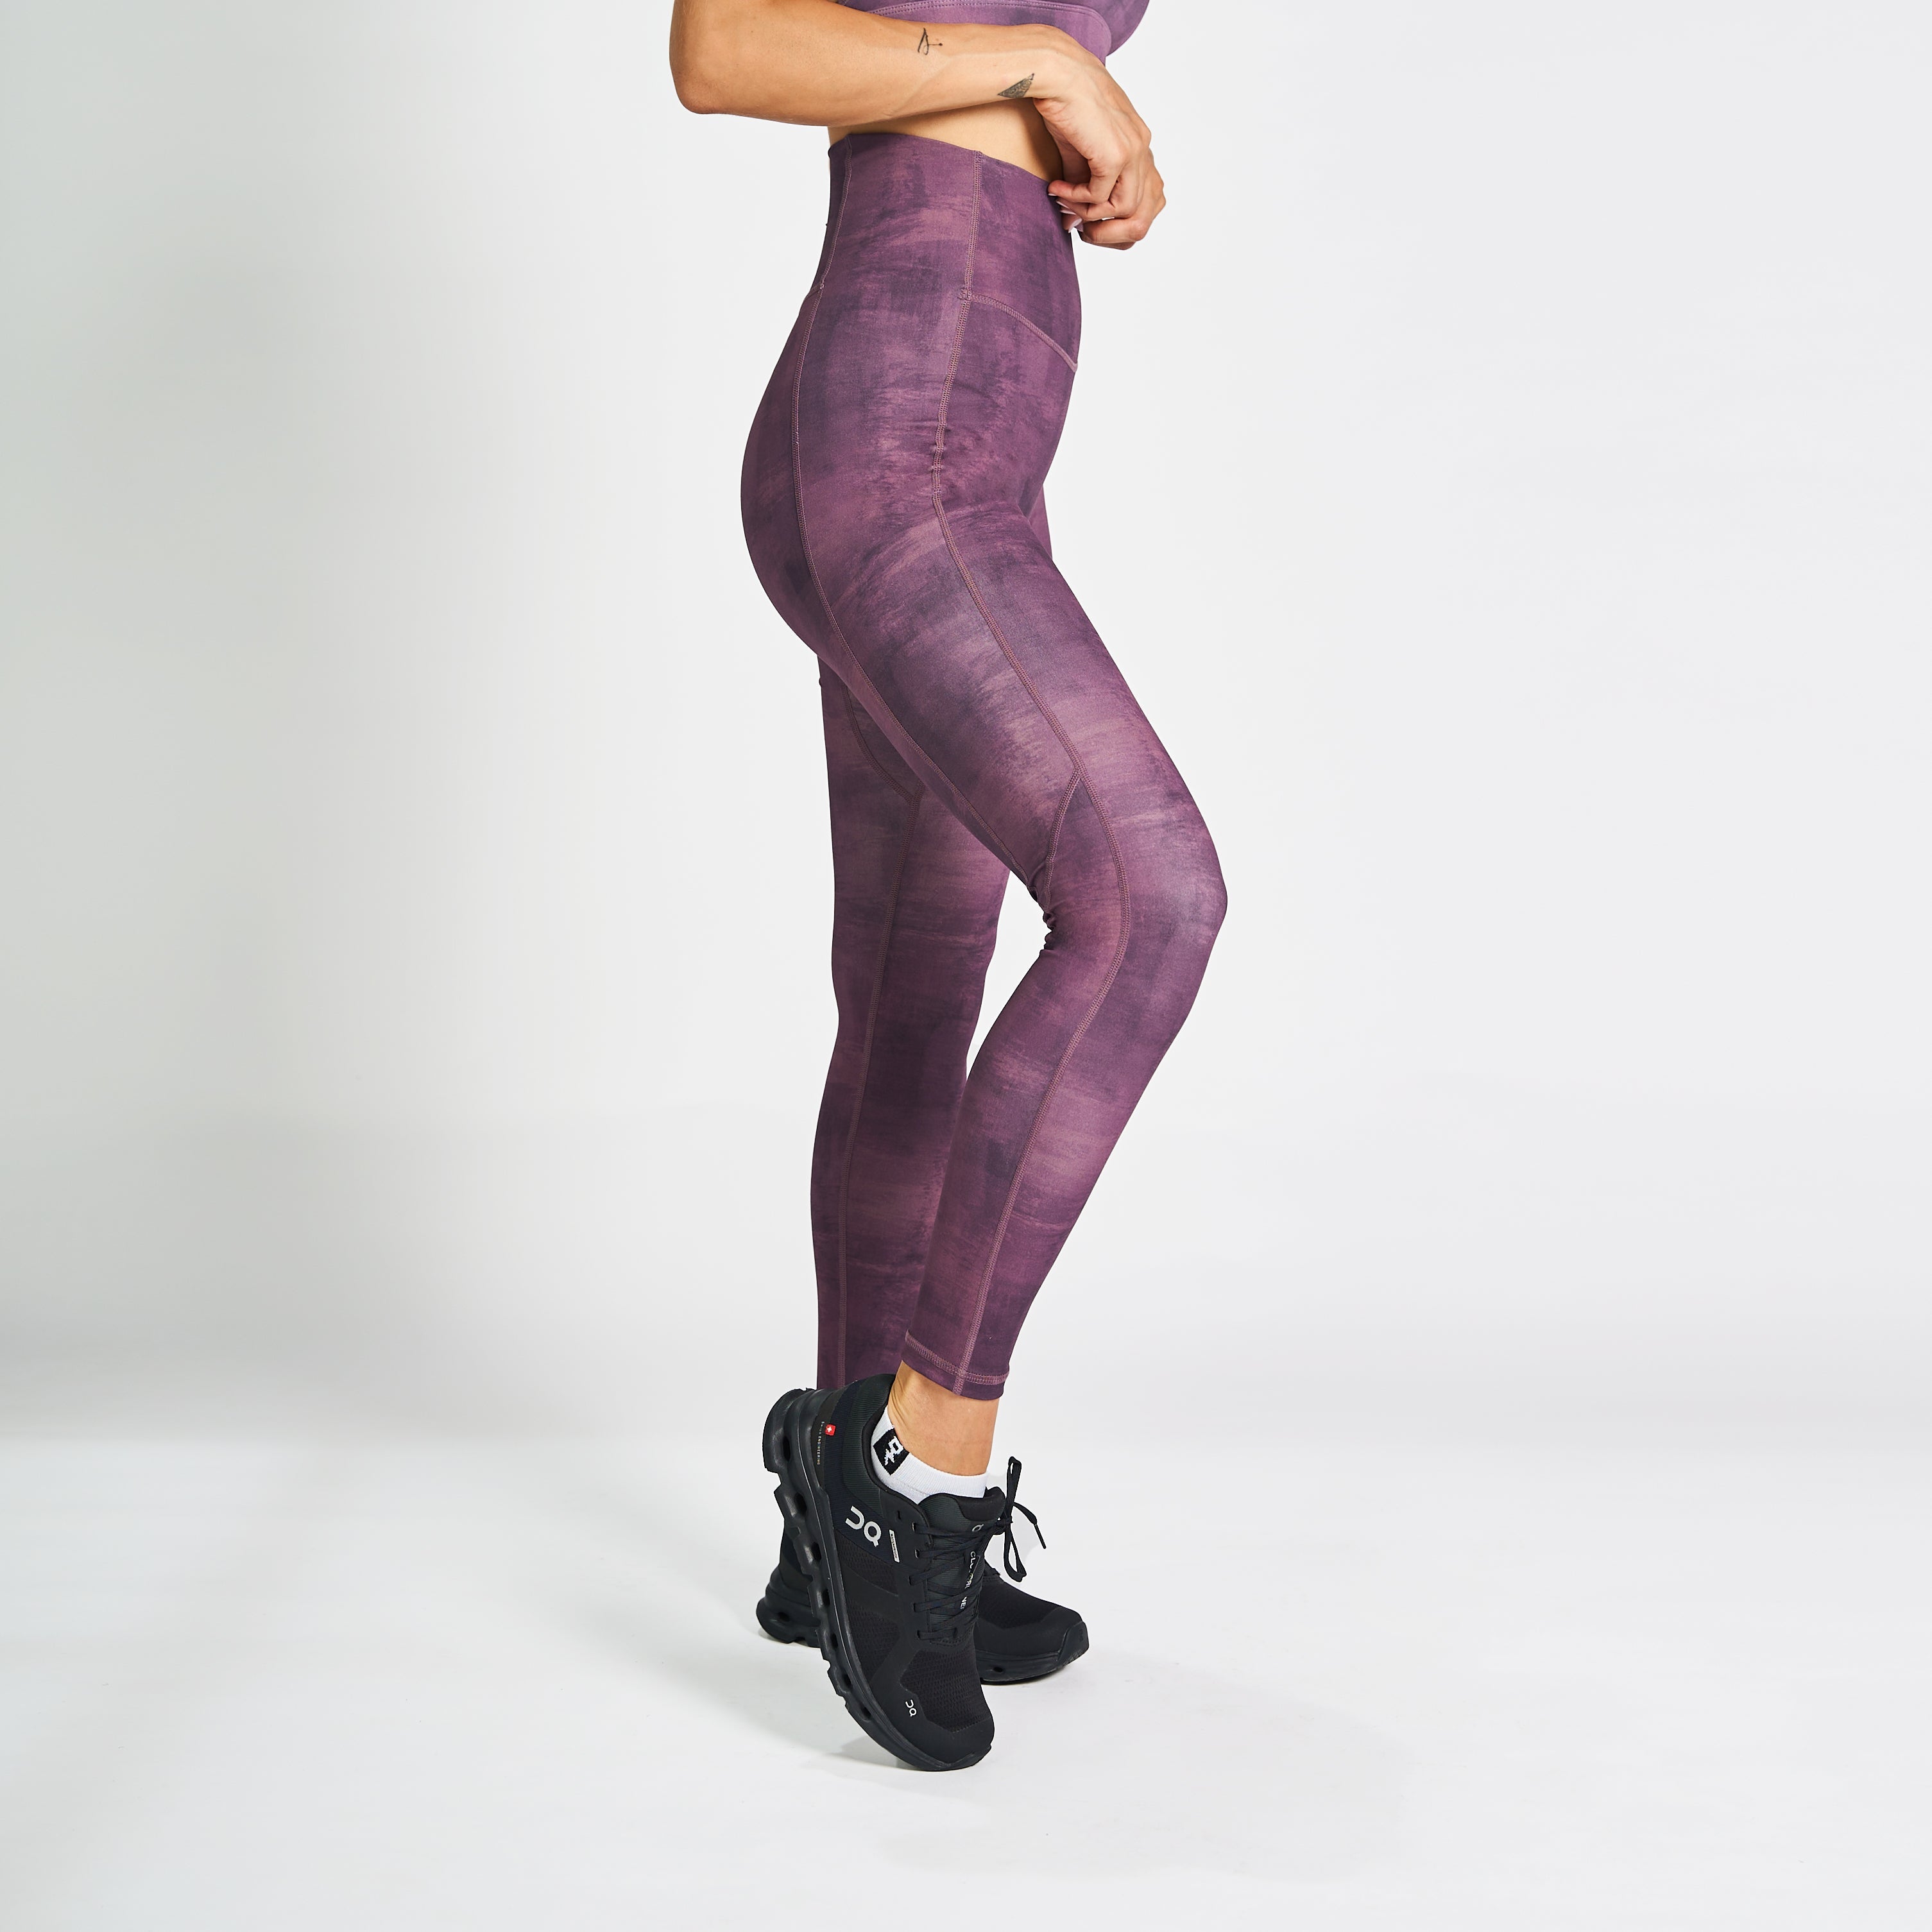 Romastory Women's Stretched Shiny Sports Leggings Elastic Yoga Pants Tights  (S, Black) at  Women's Clothing store